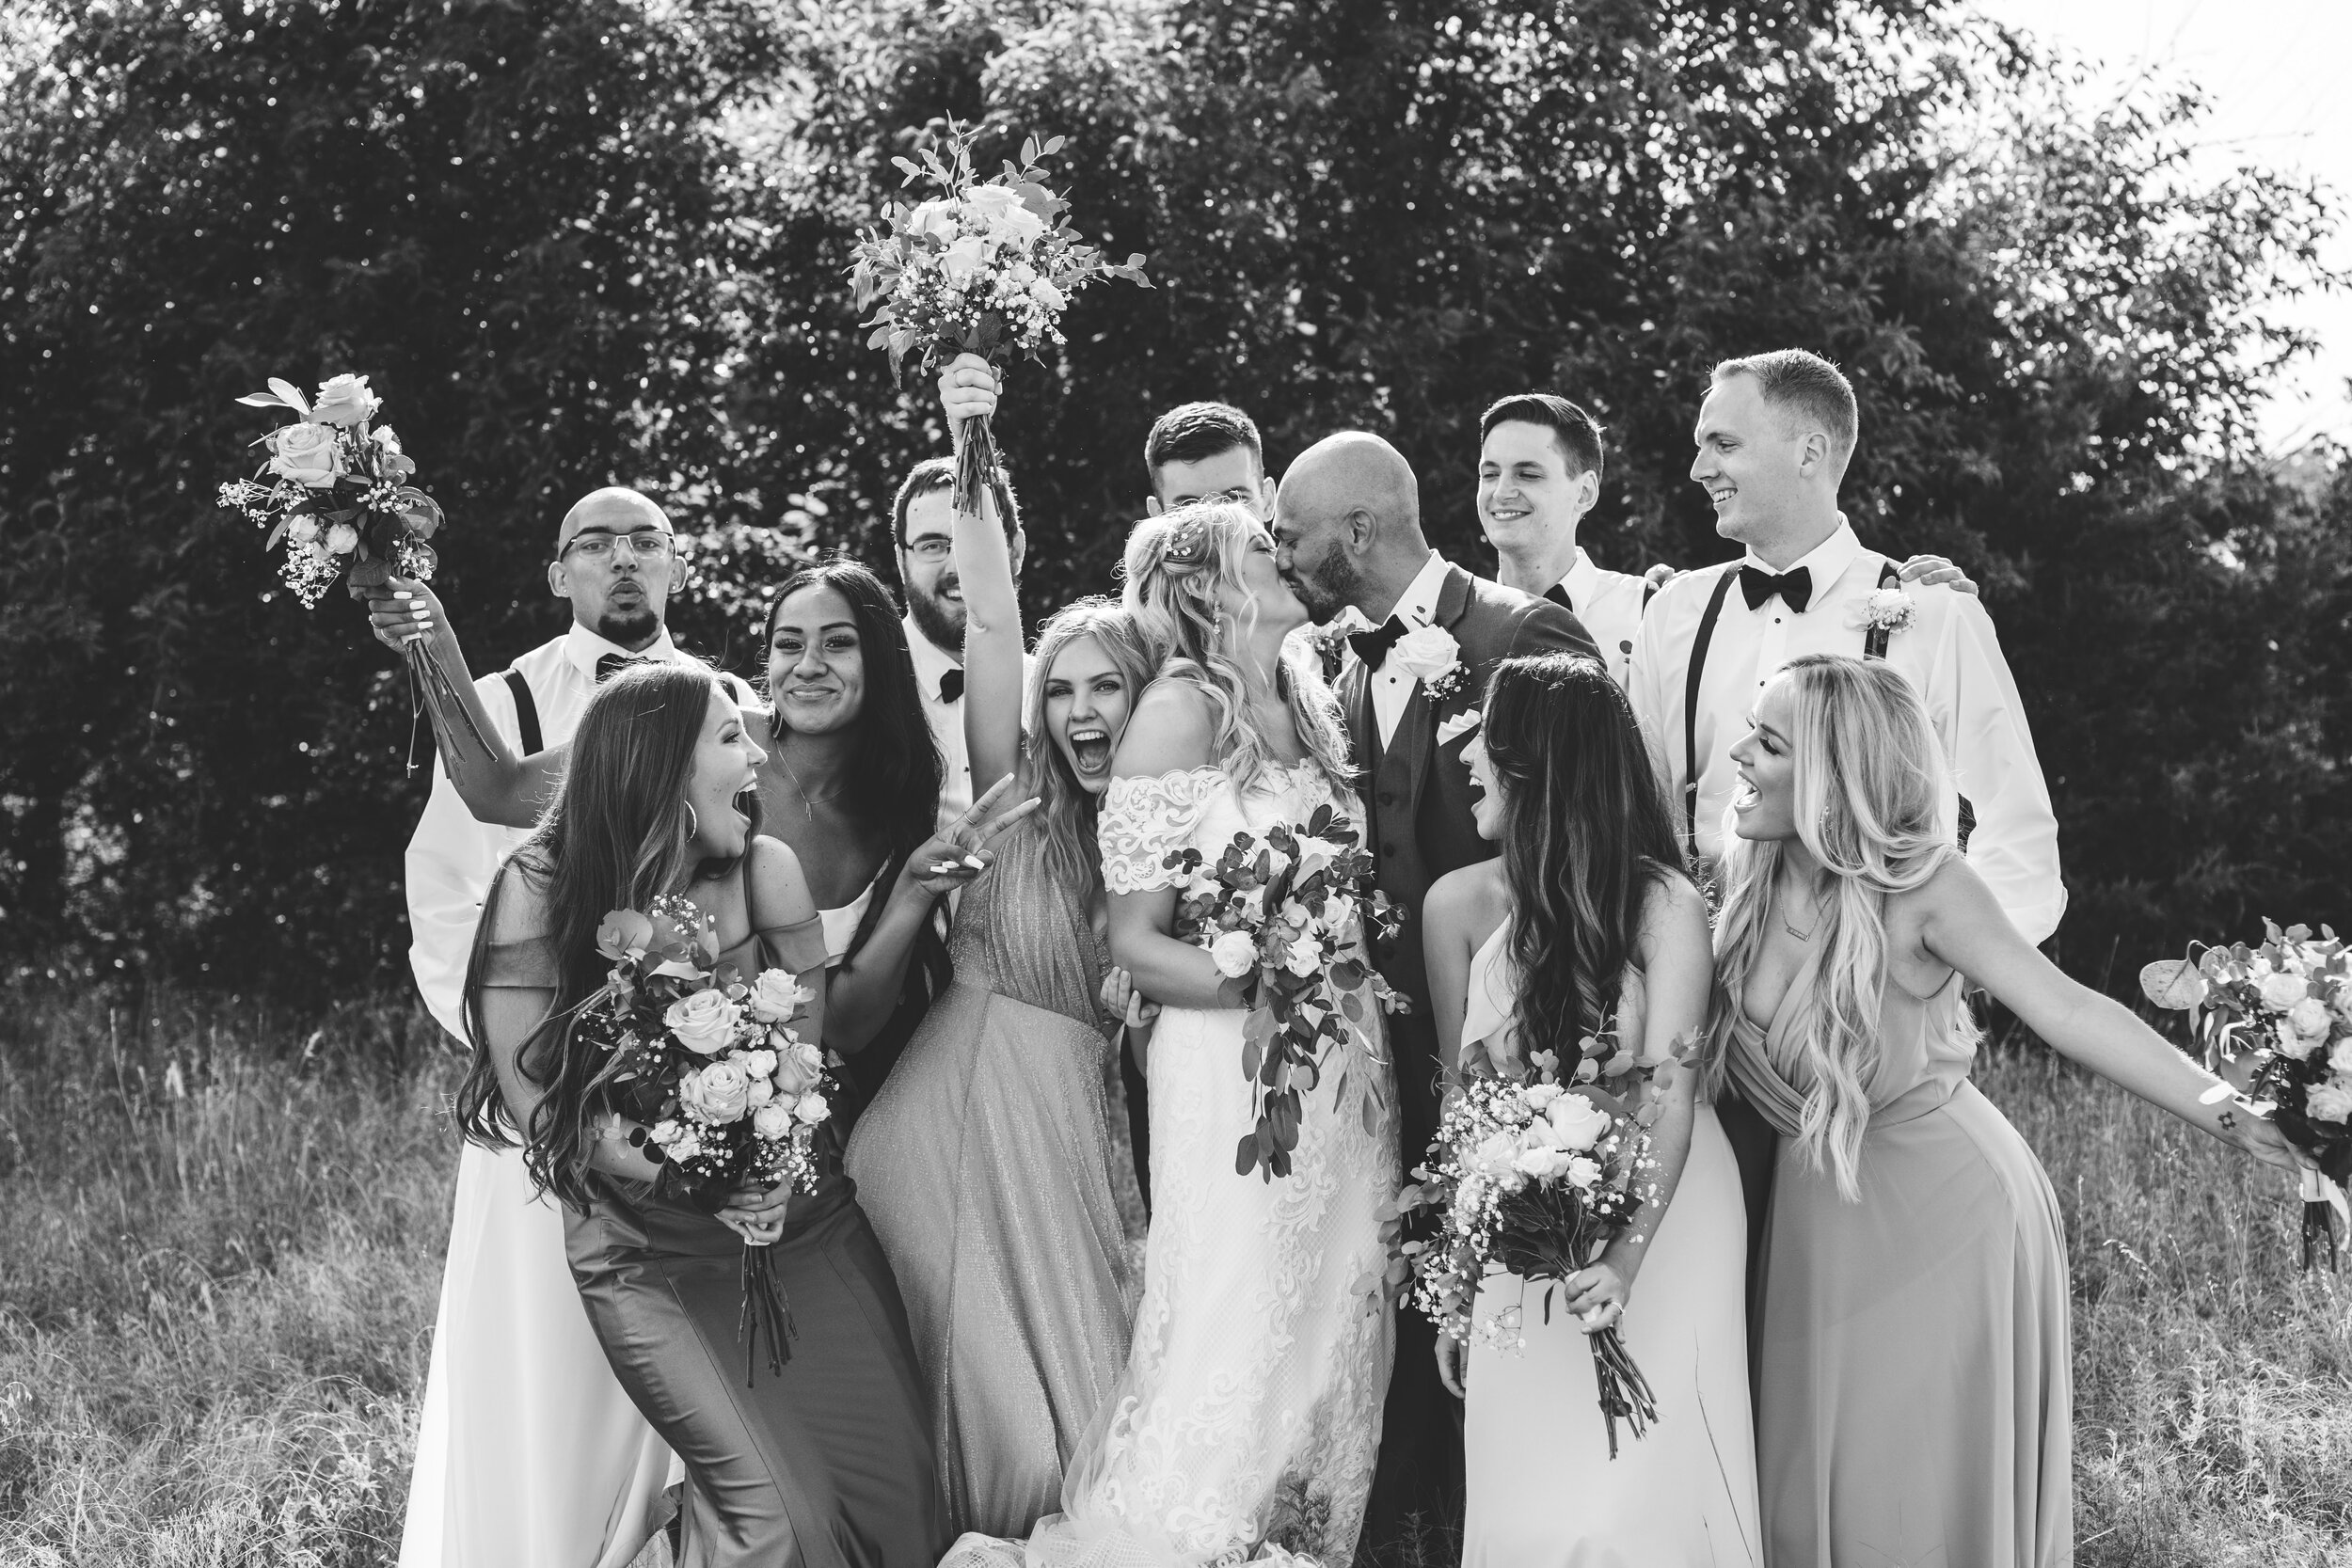 Hayley + Lorenzo - Summer White Chapel Wedding at Stone Hill Barn in Augusta, Kansas123.jpg